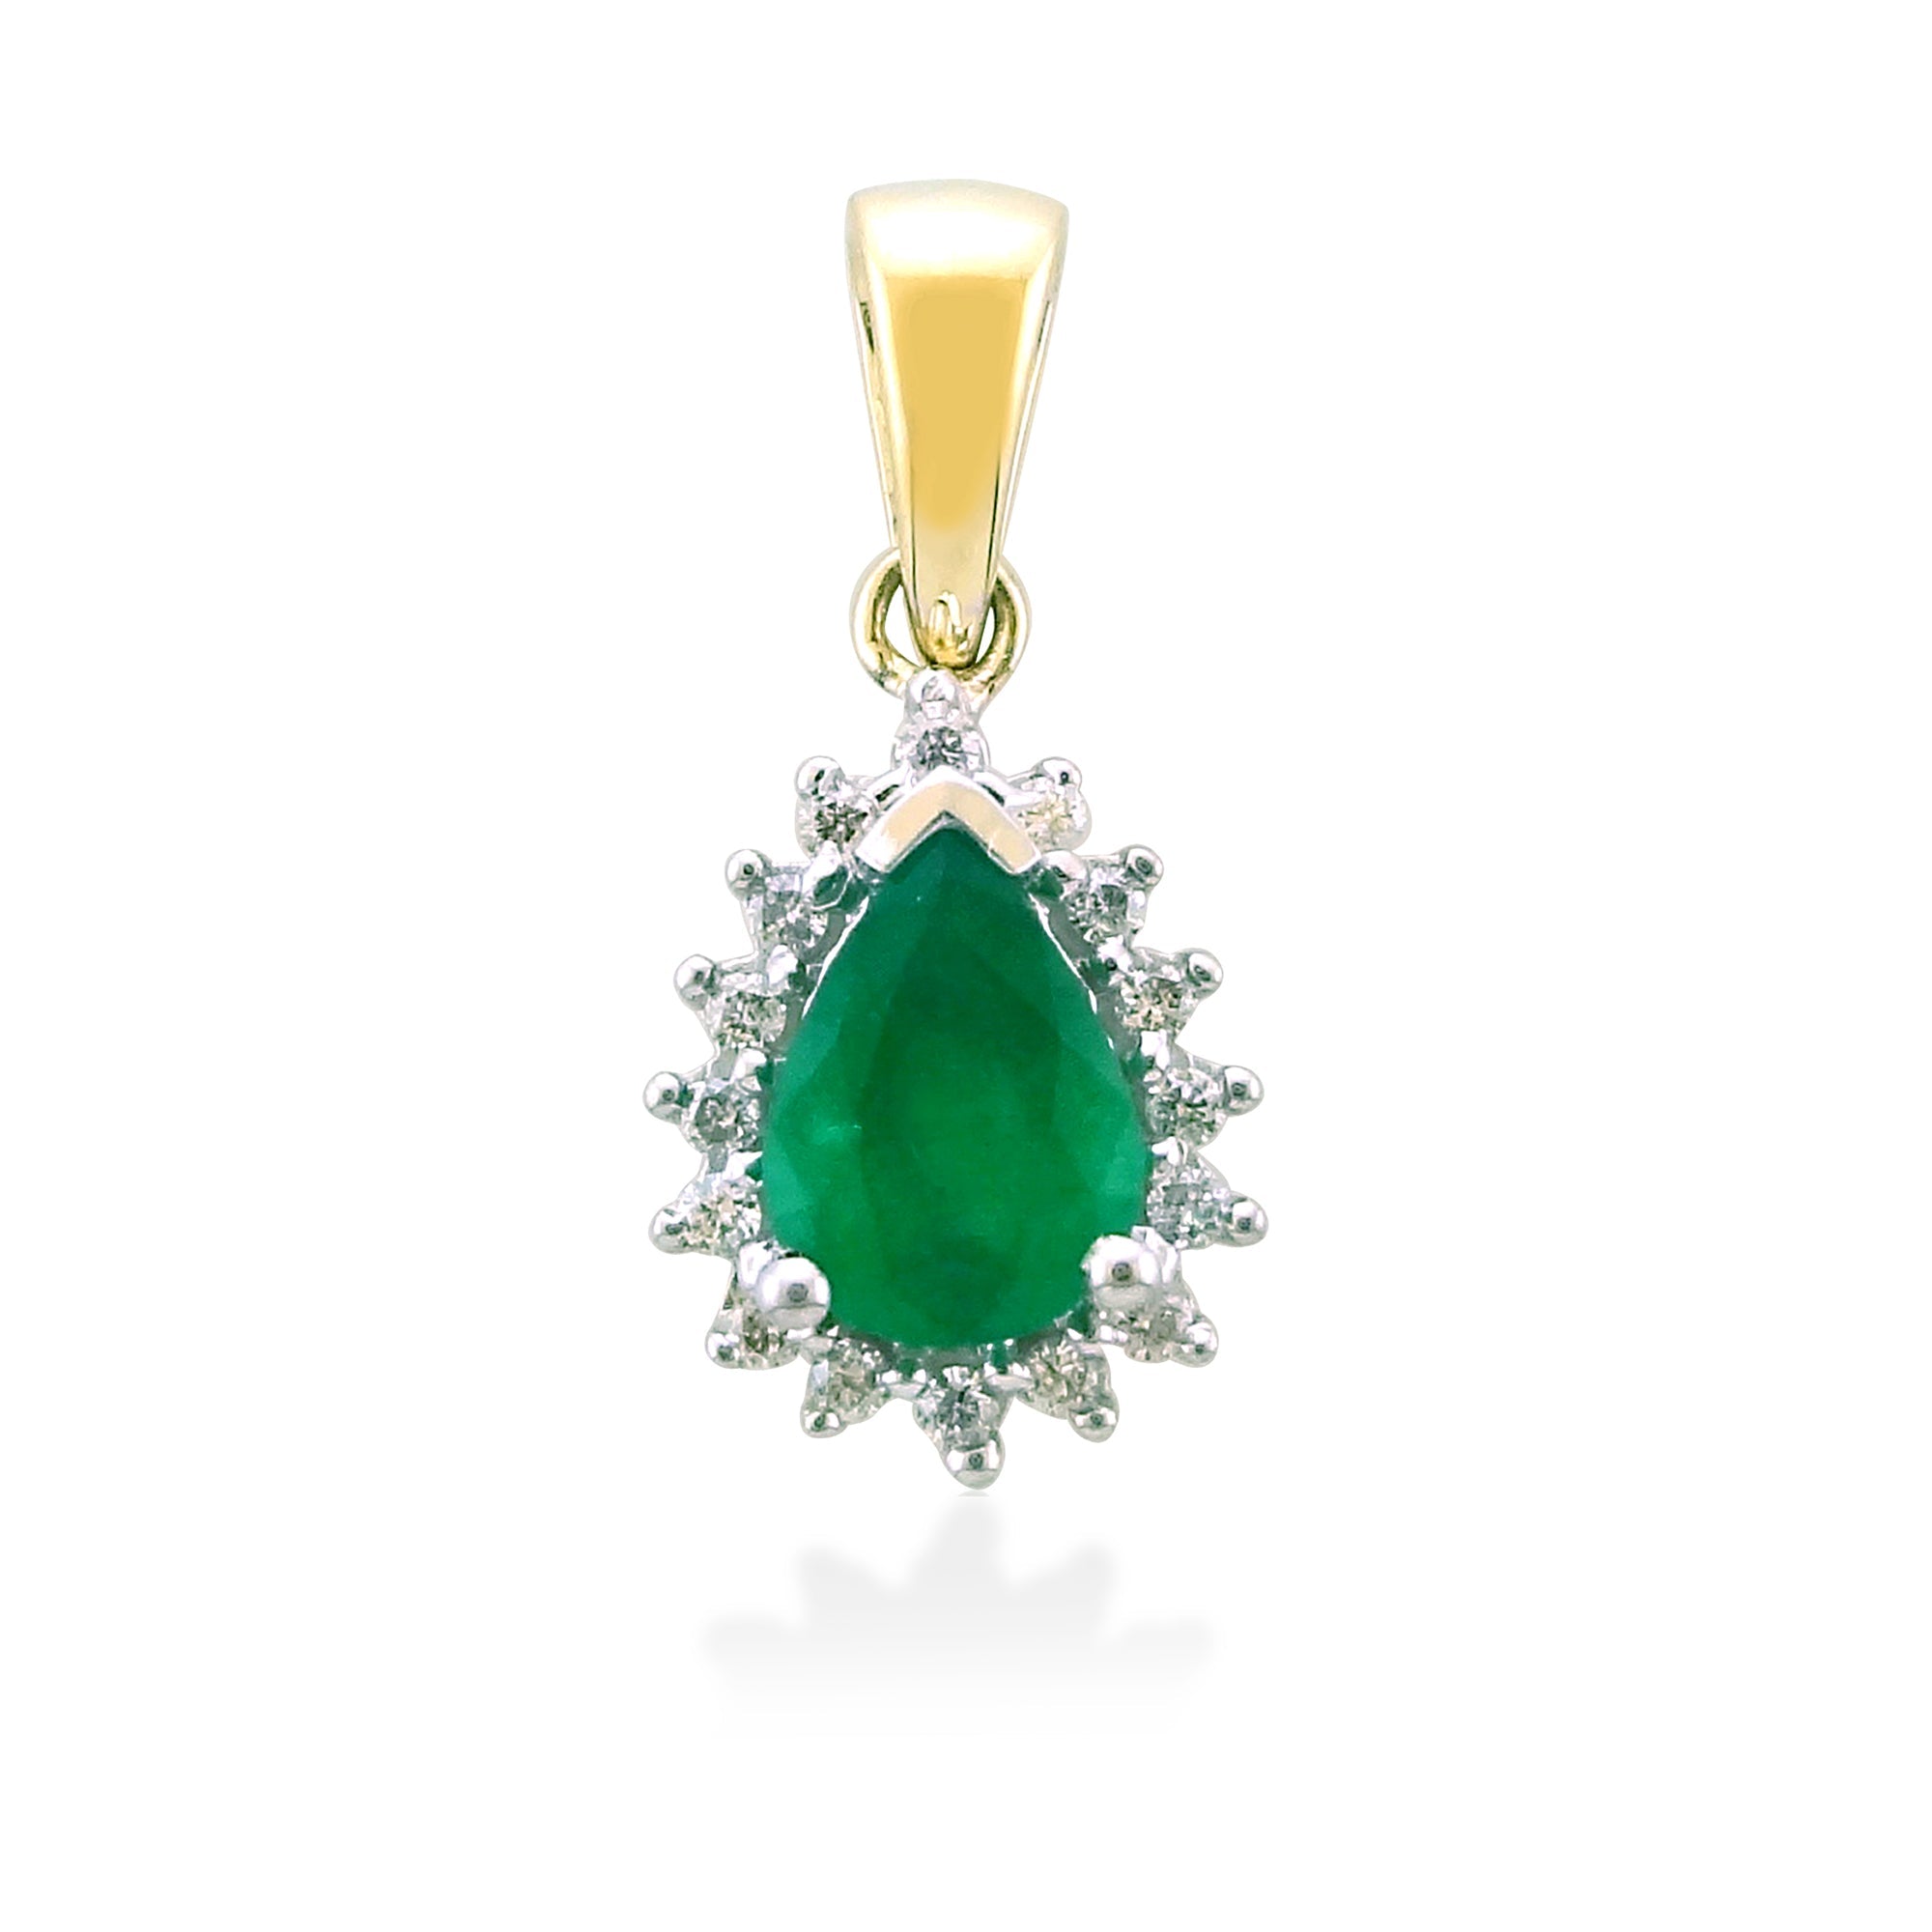 9ct gold 7x5mm pear shape emerald & diamond cluster pendant 0.09ct